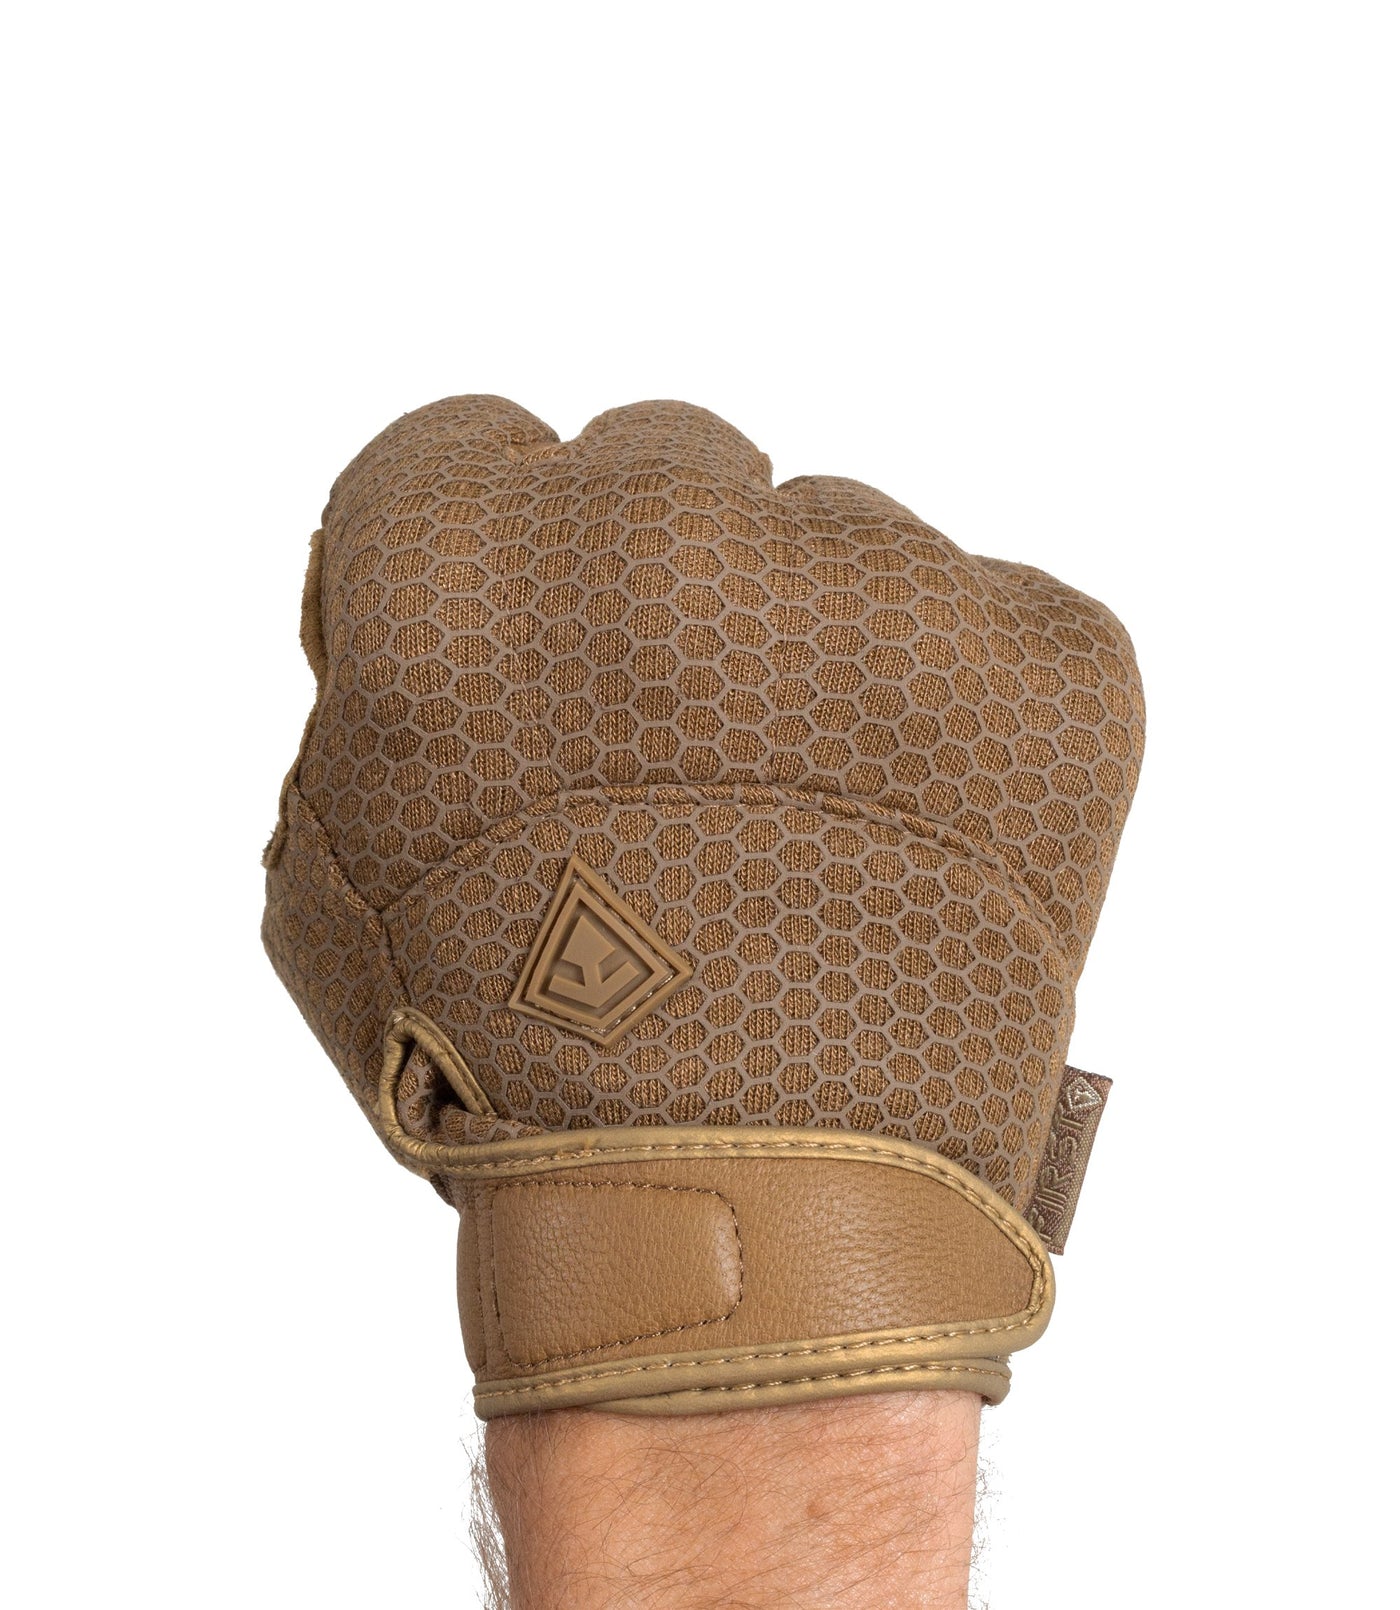 Warrior Gloves F-Type - Fingerless Cut Resistant Hard Knuckle Tactical  Gloves